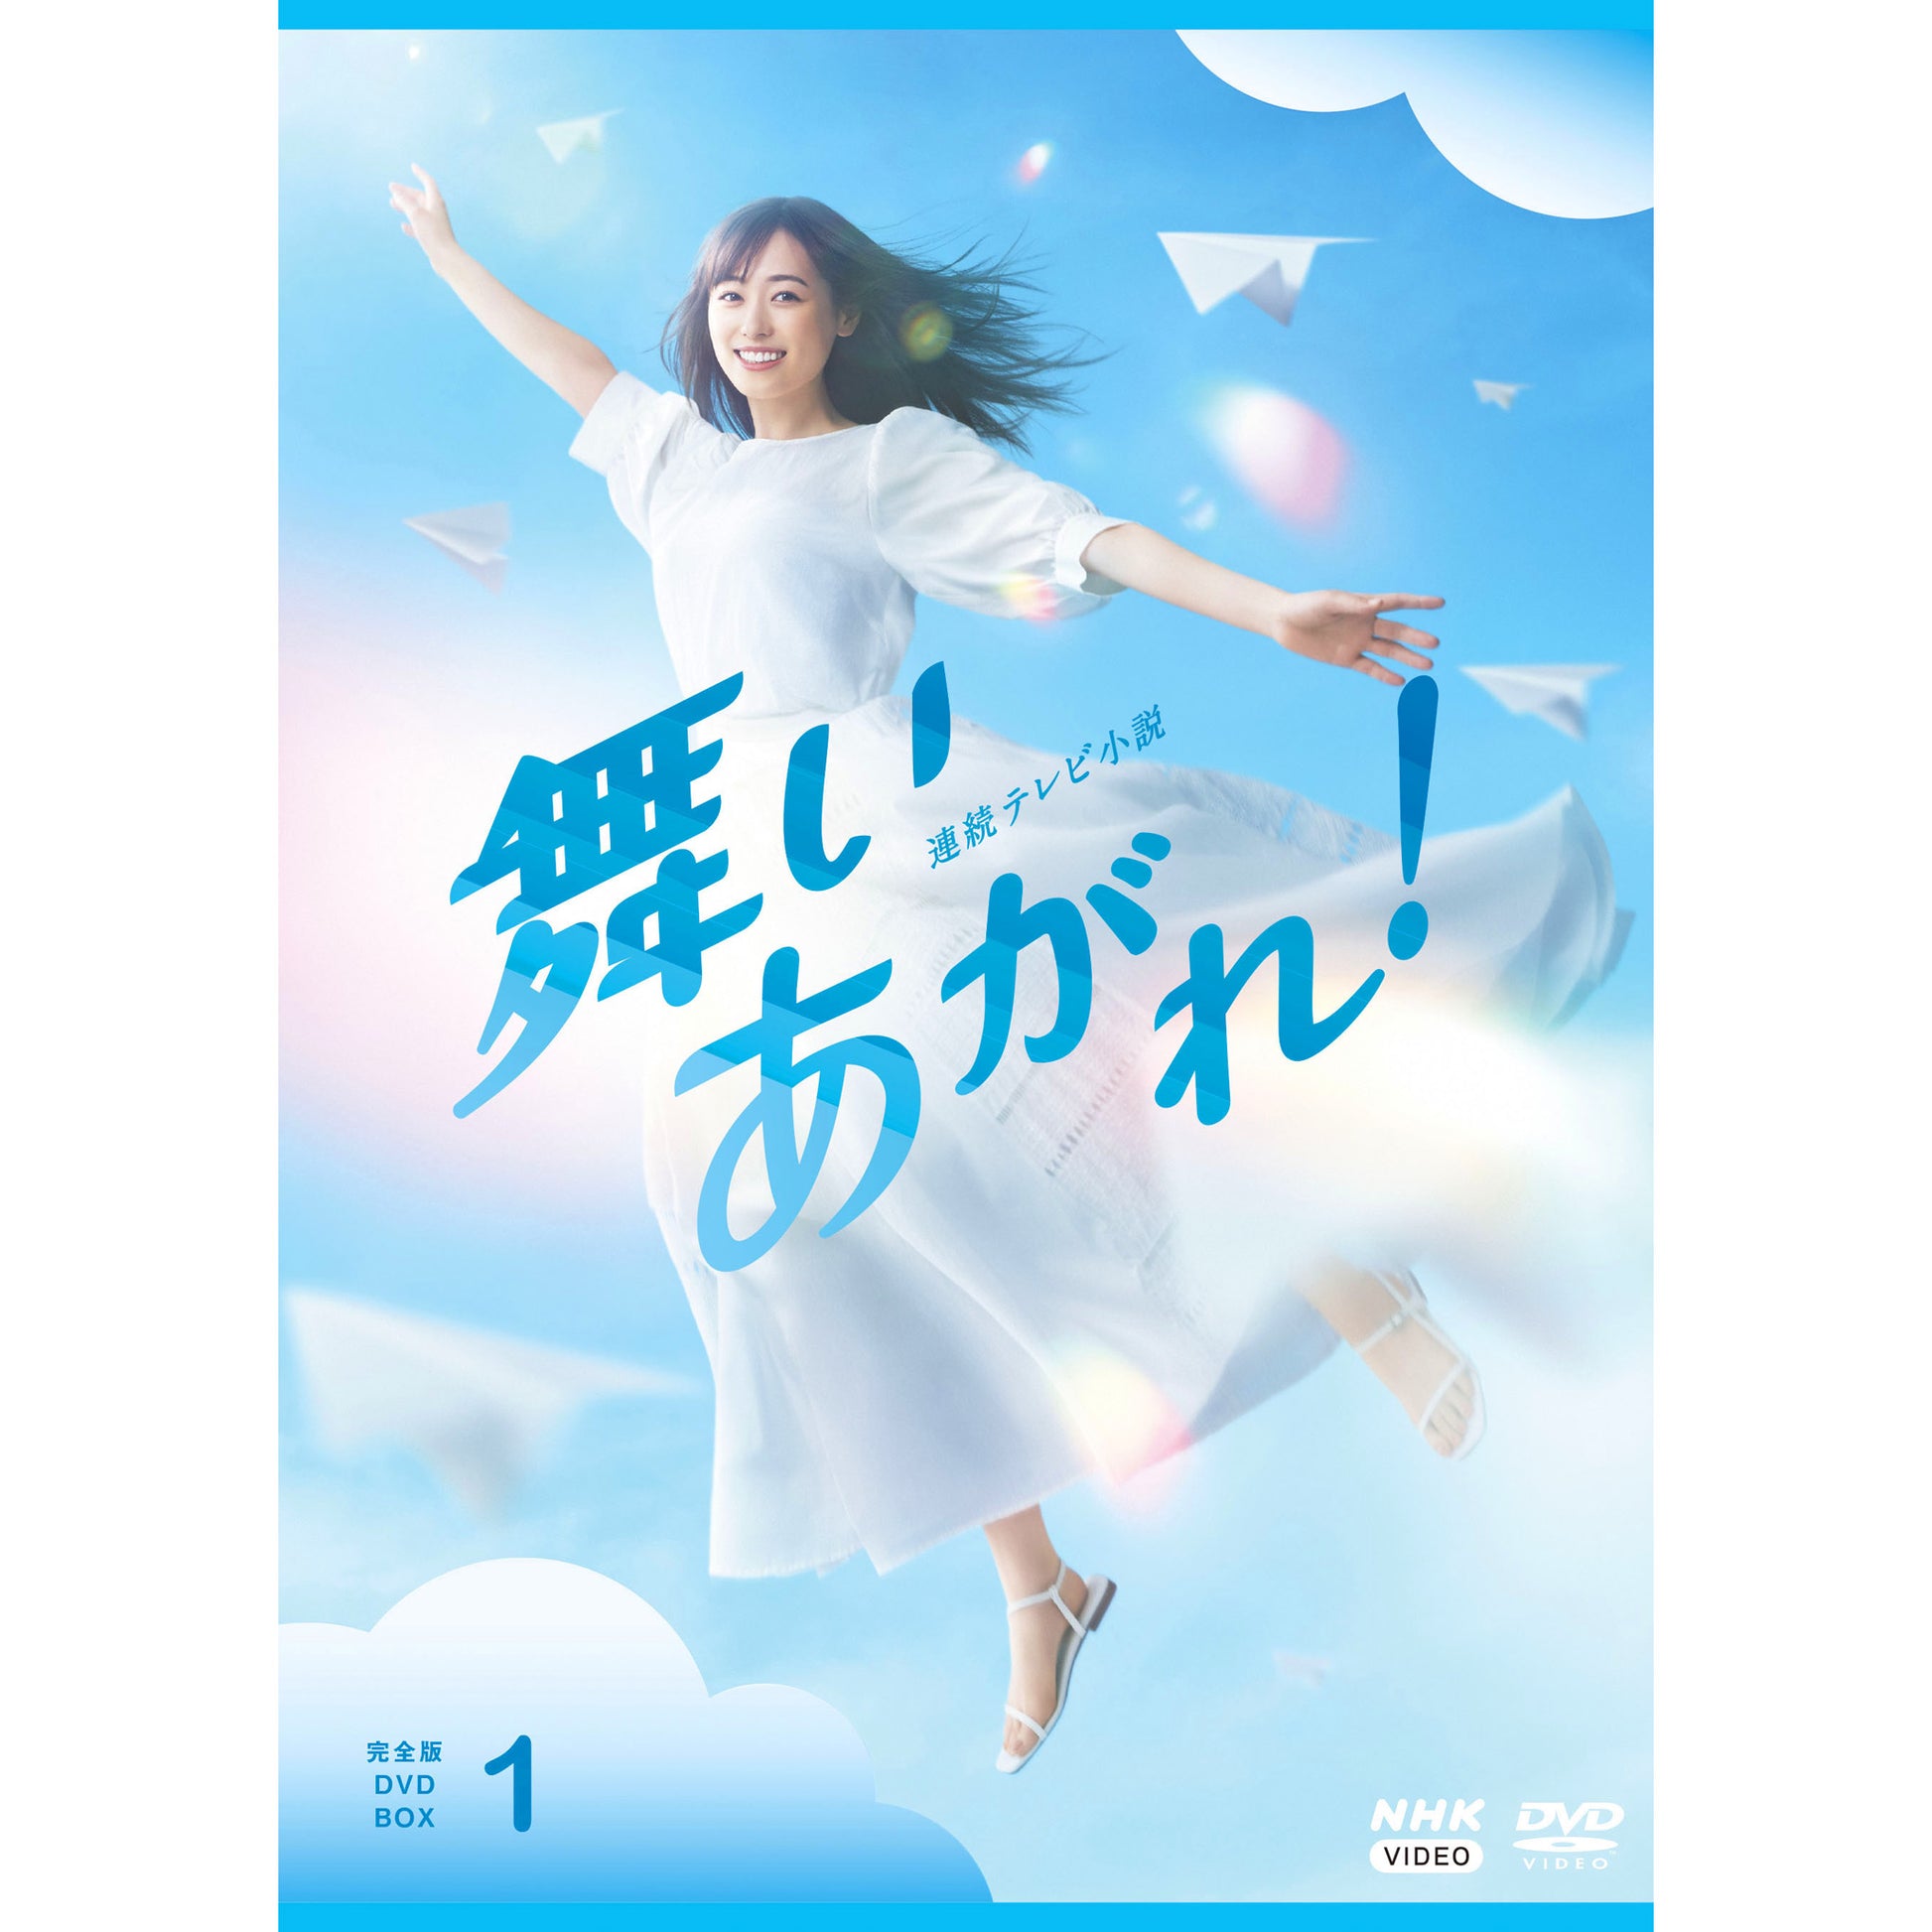 【DVD】 連続テレビ小説 舞いあがれ! 完全版 DVD BOX1